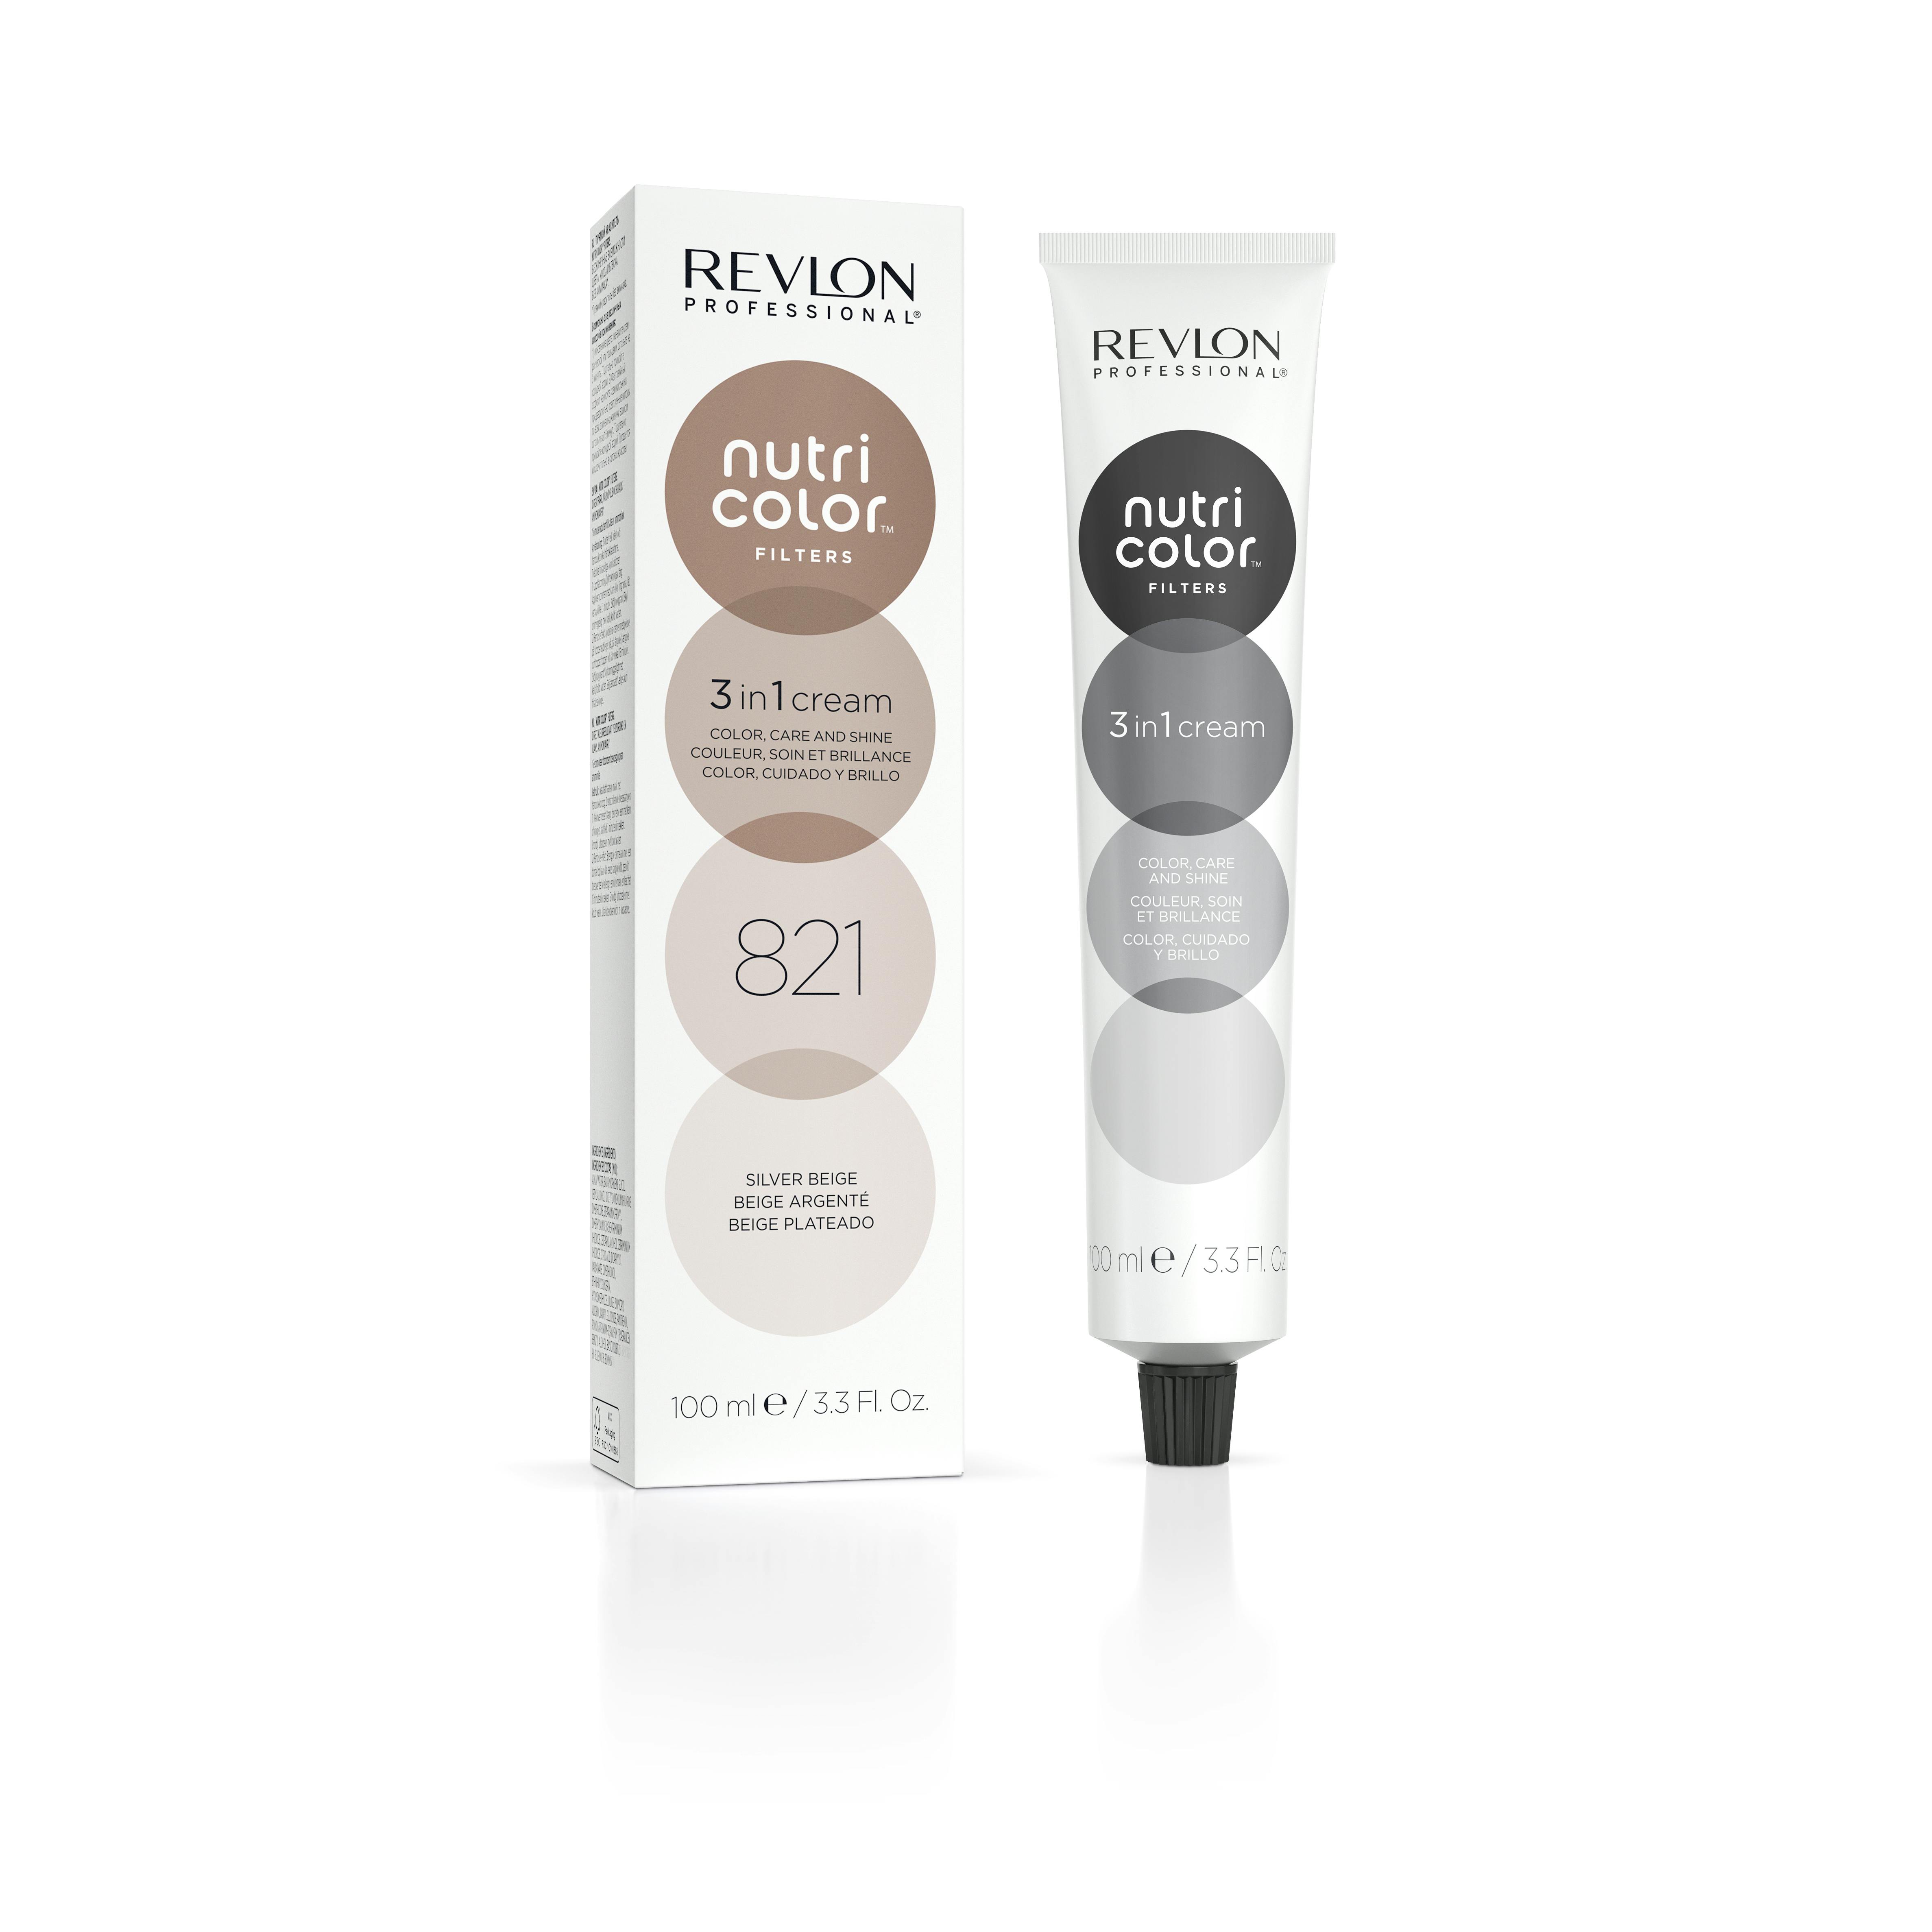 Revlon Professional Nutri Color Filters 821 Silver Beige 100 ml